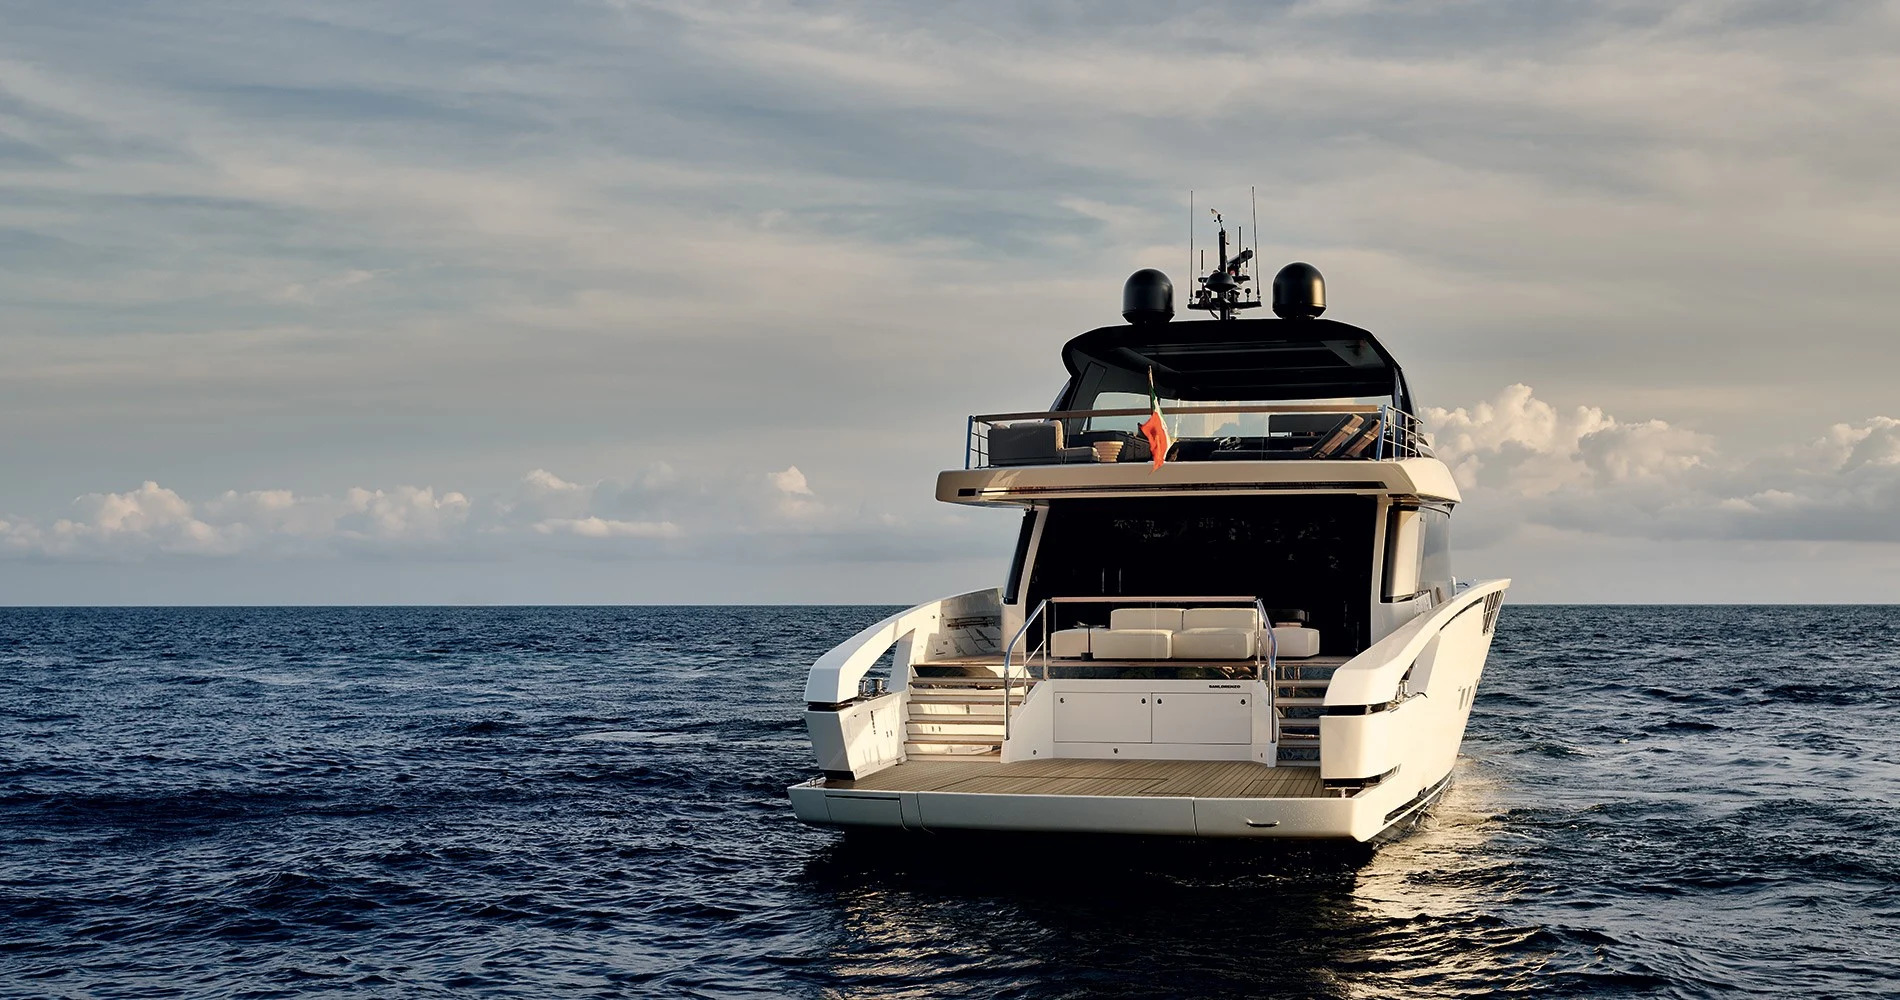 Exceptional SX88 Sanlorenzo Yacht “M/Y LA” now available for sale